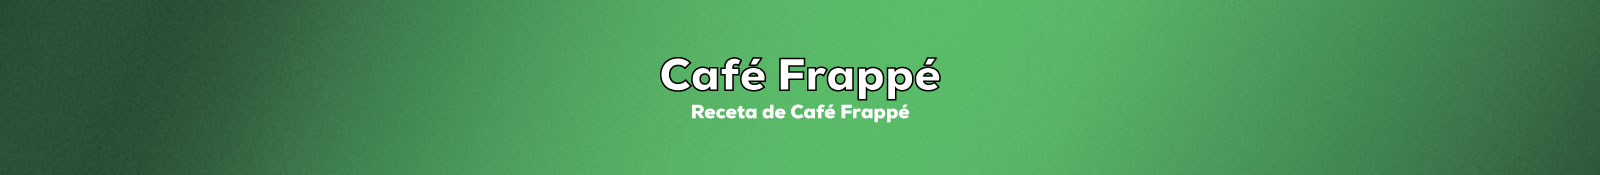 Preparar Café Frappé